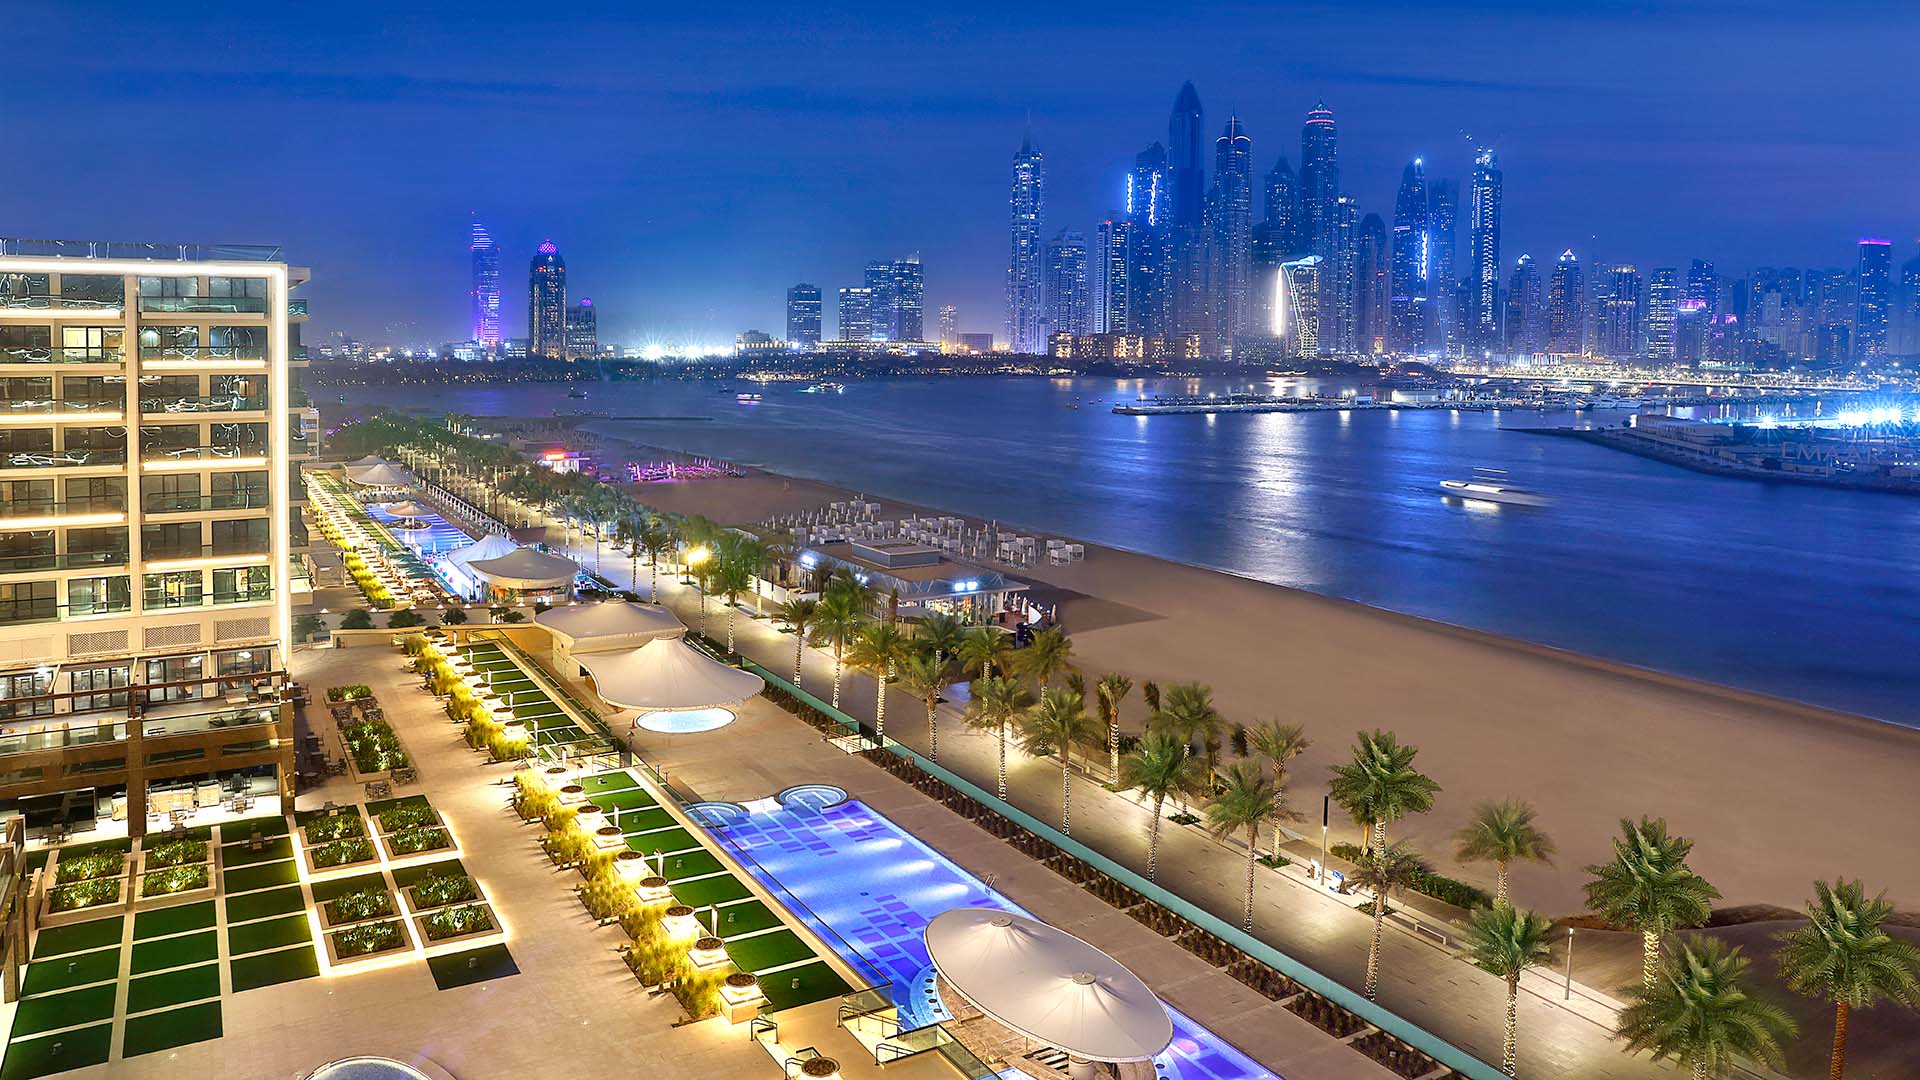 Marriott Resort Palm Jumeirah, Dubai beachfront at night with Dubai skyline